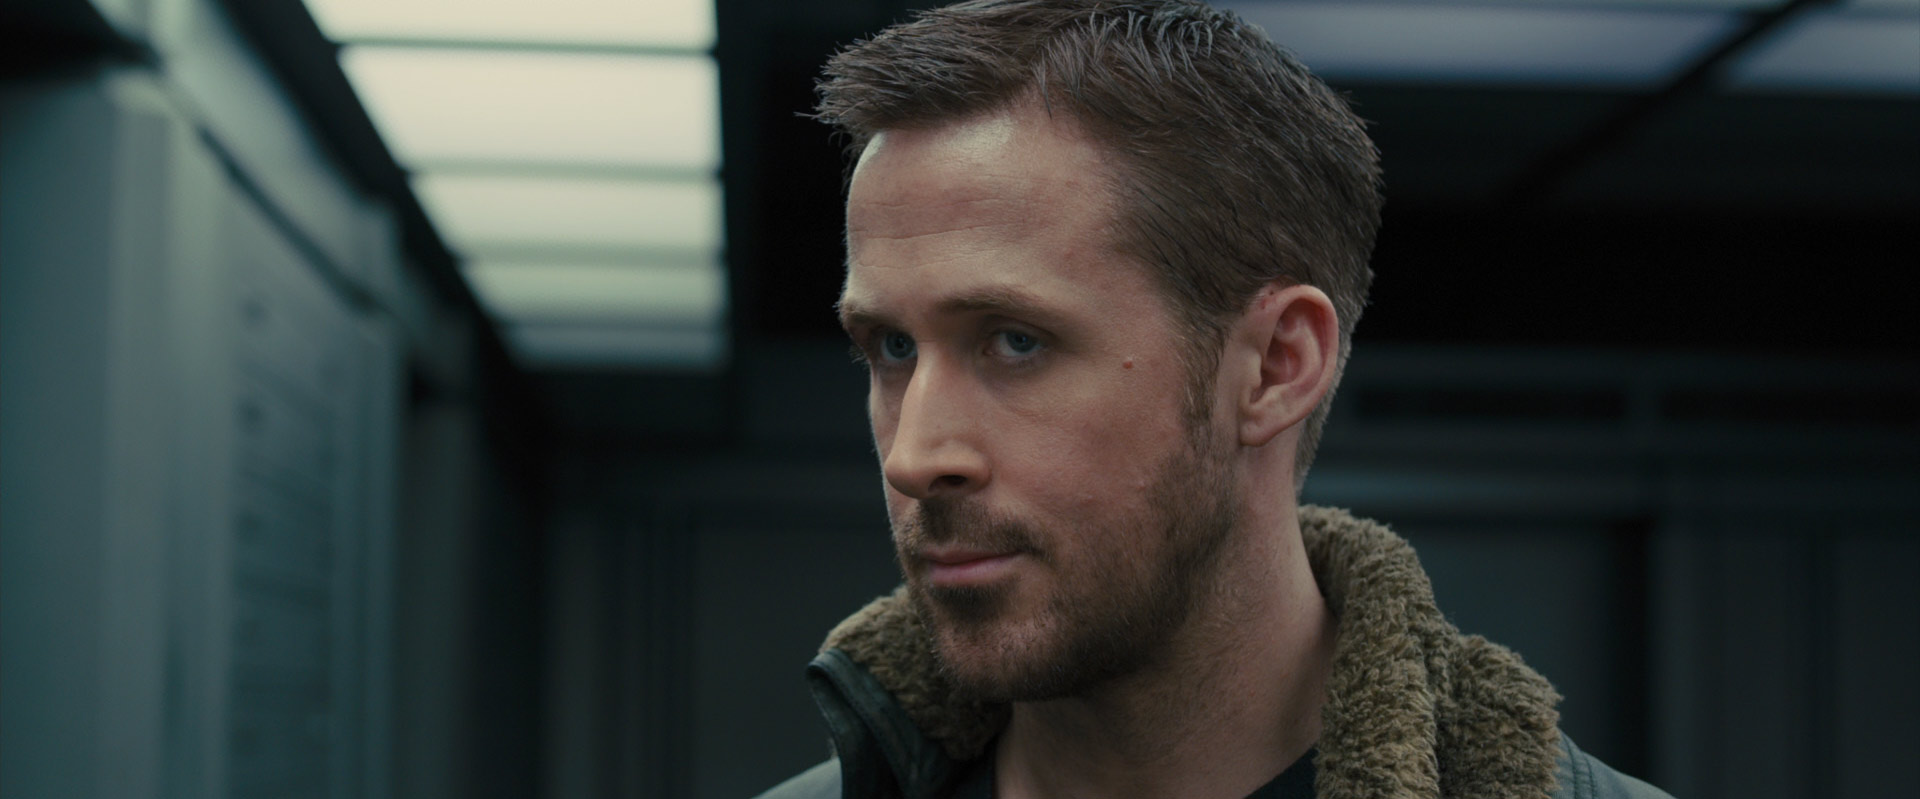 The Ryan Gosling Blade Runner 2049 Haircut – haircutting.co